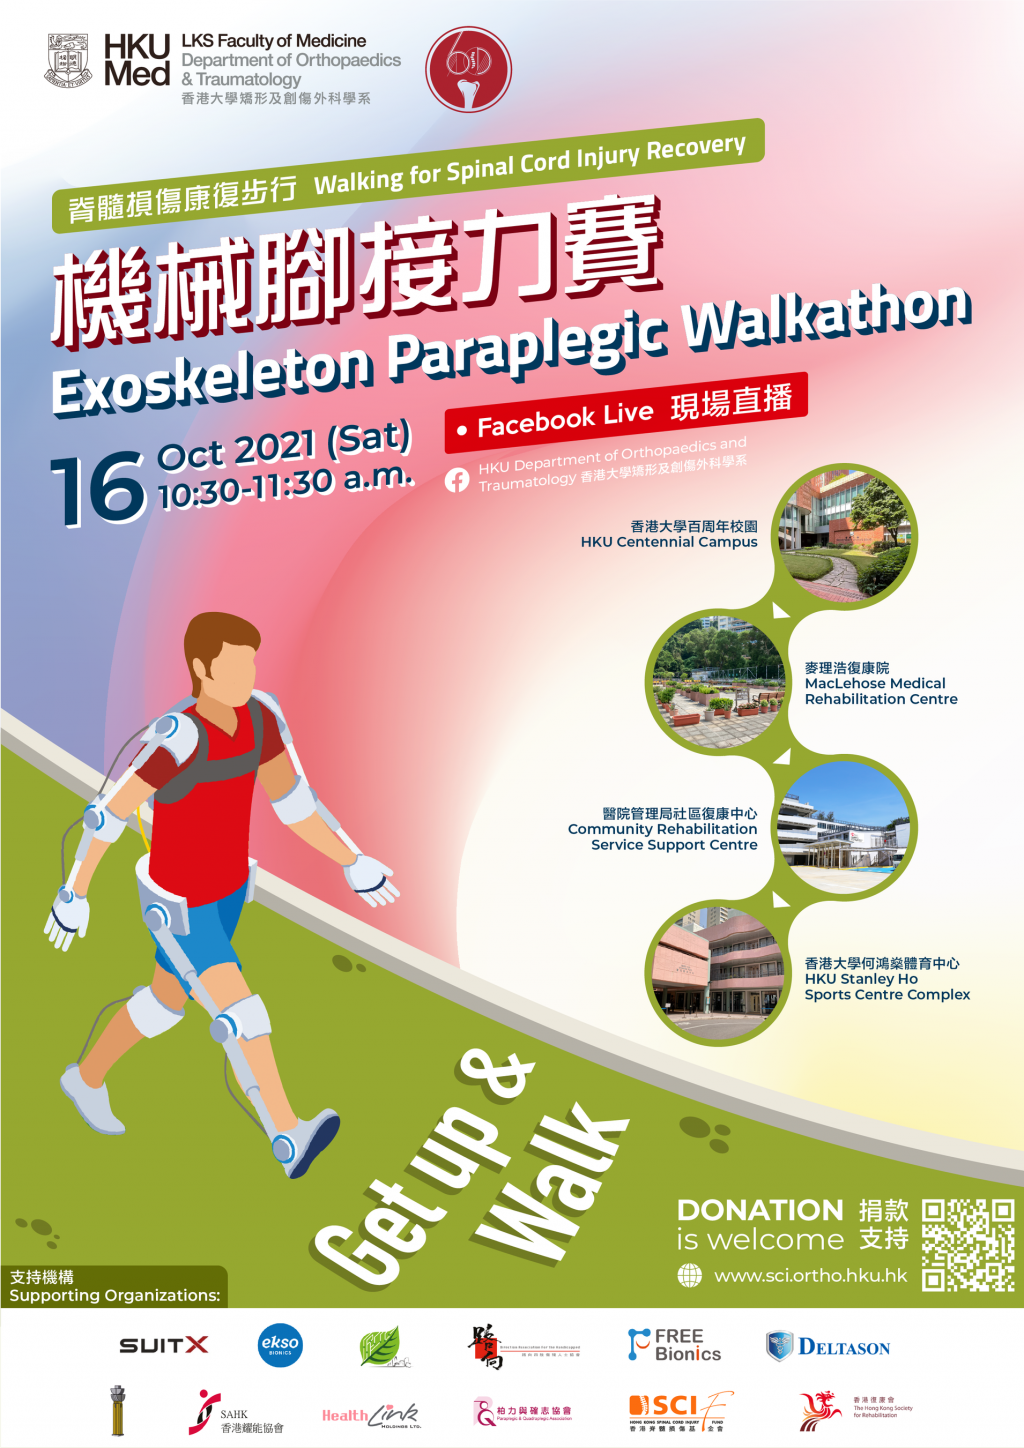 Exoskeleton Paraplegic Walkathon on 16 Oct